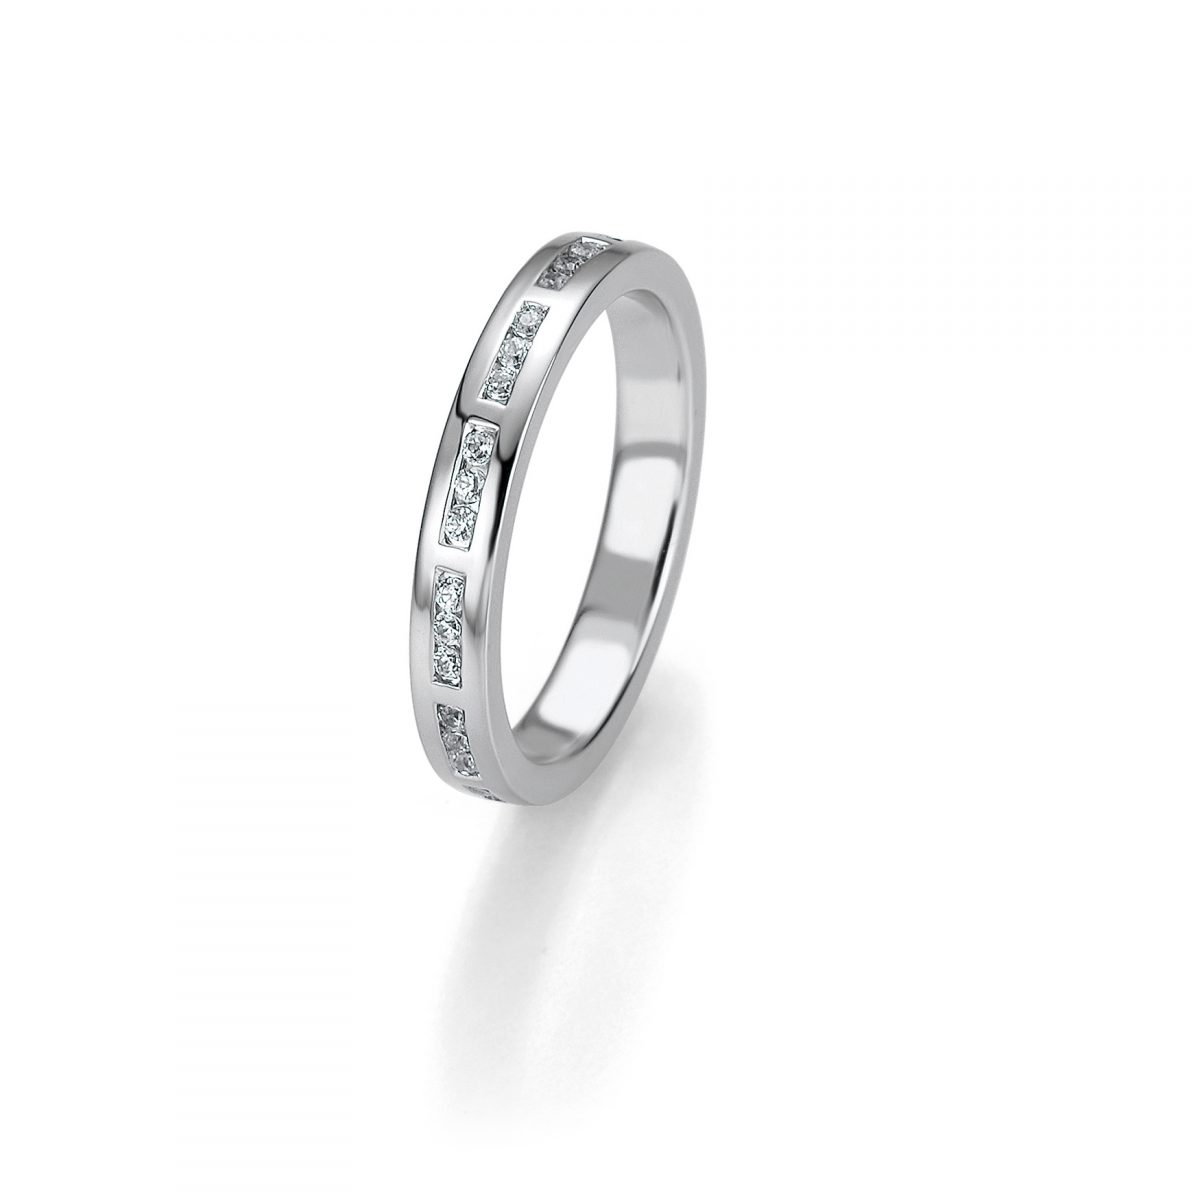 Series K18 Ring with Diamonds